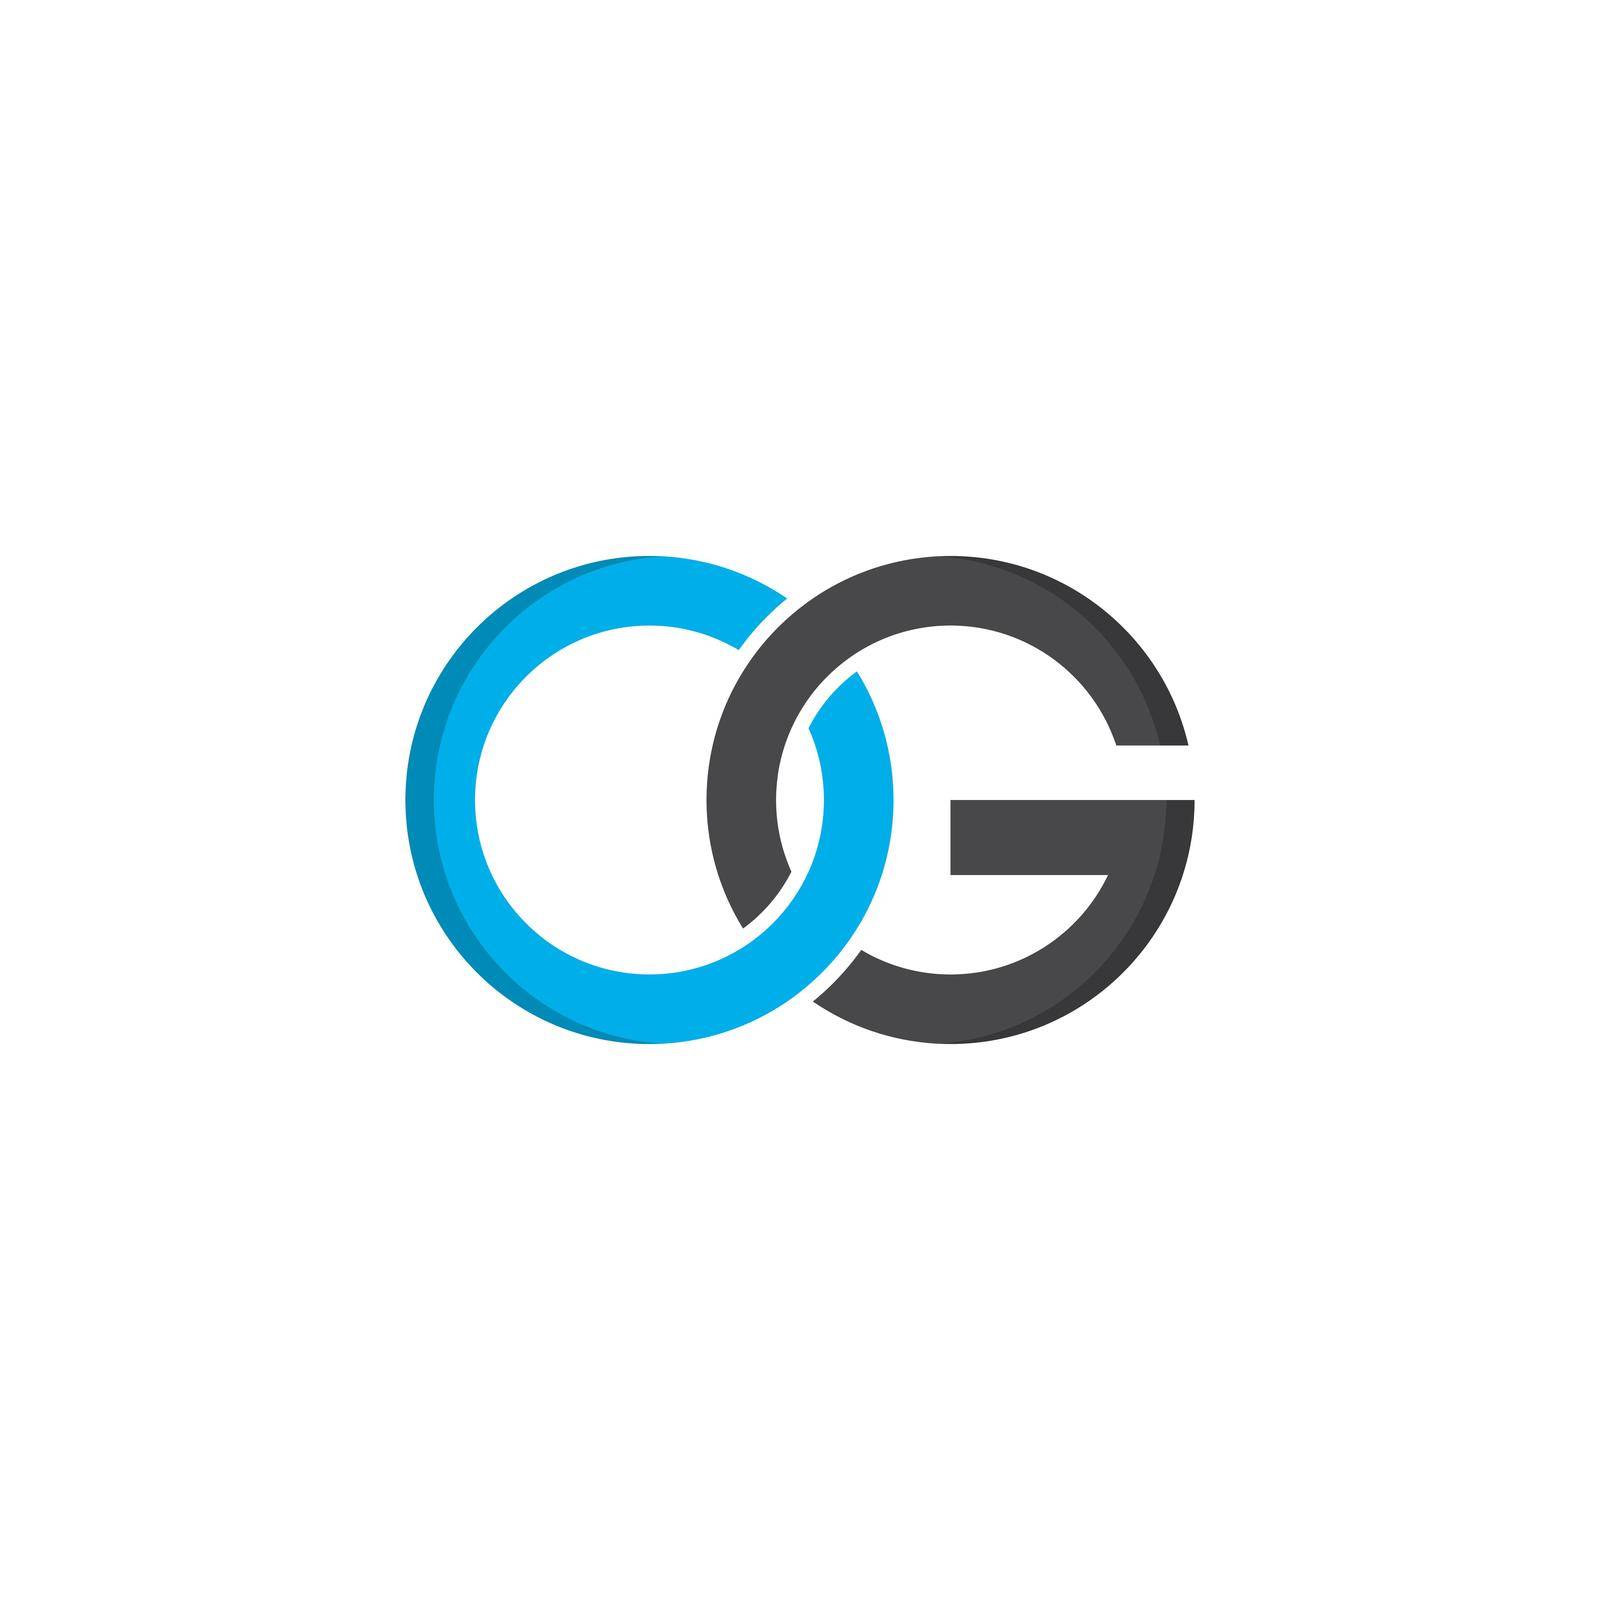 letter OG logo vector icon illustration design